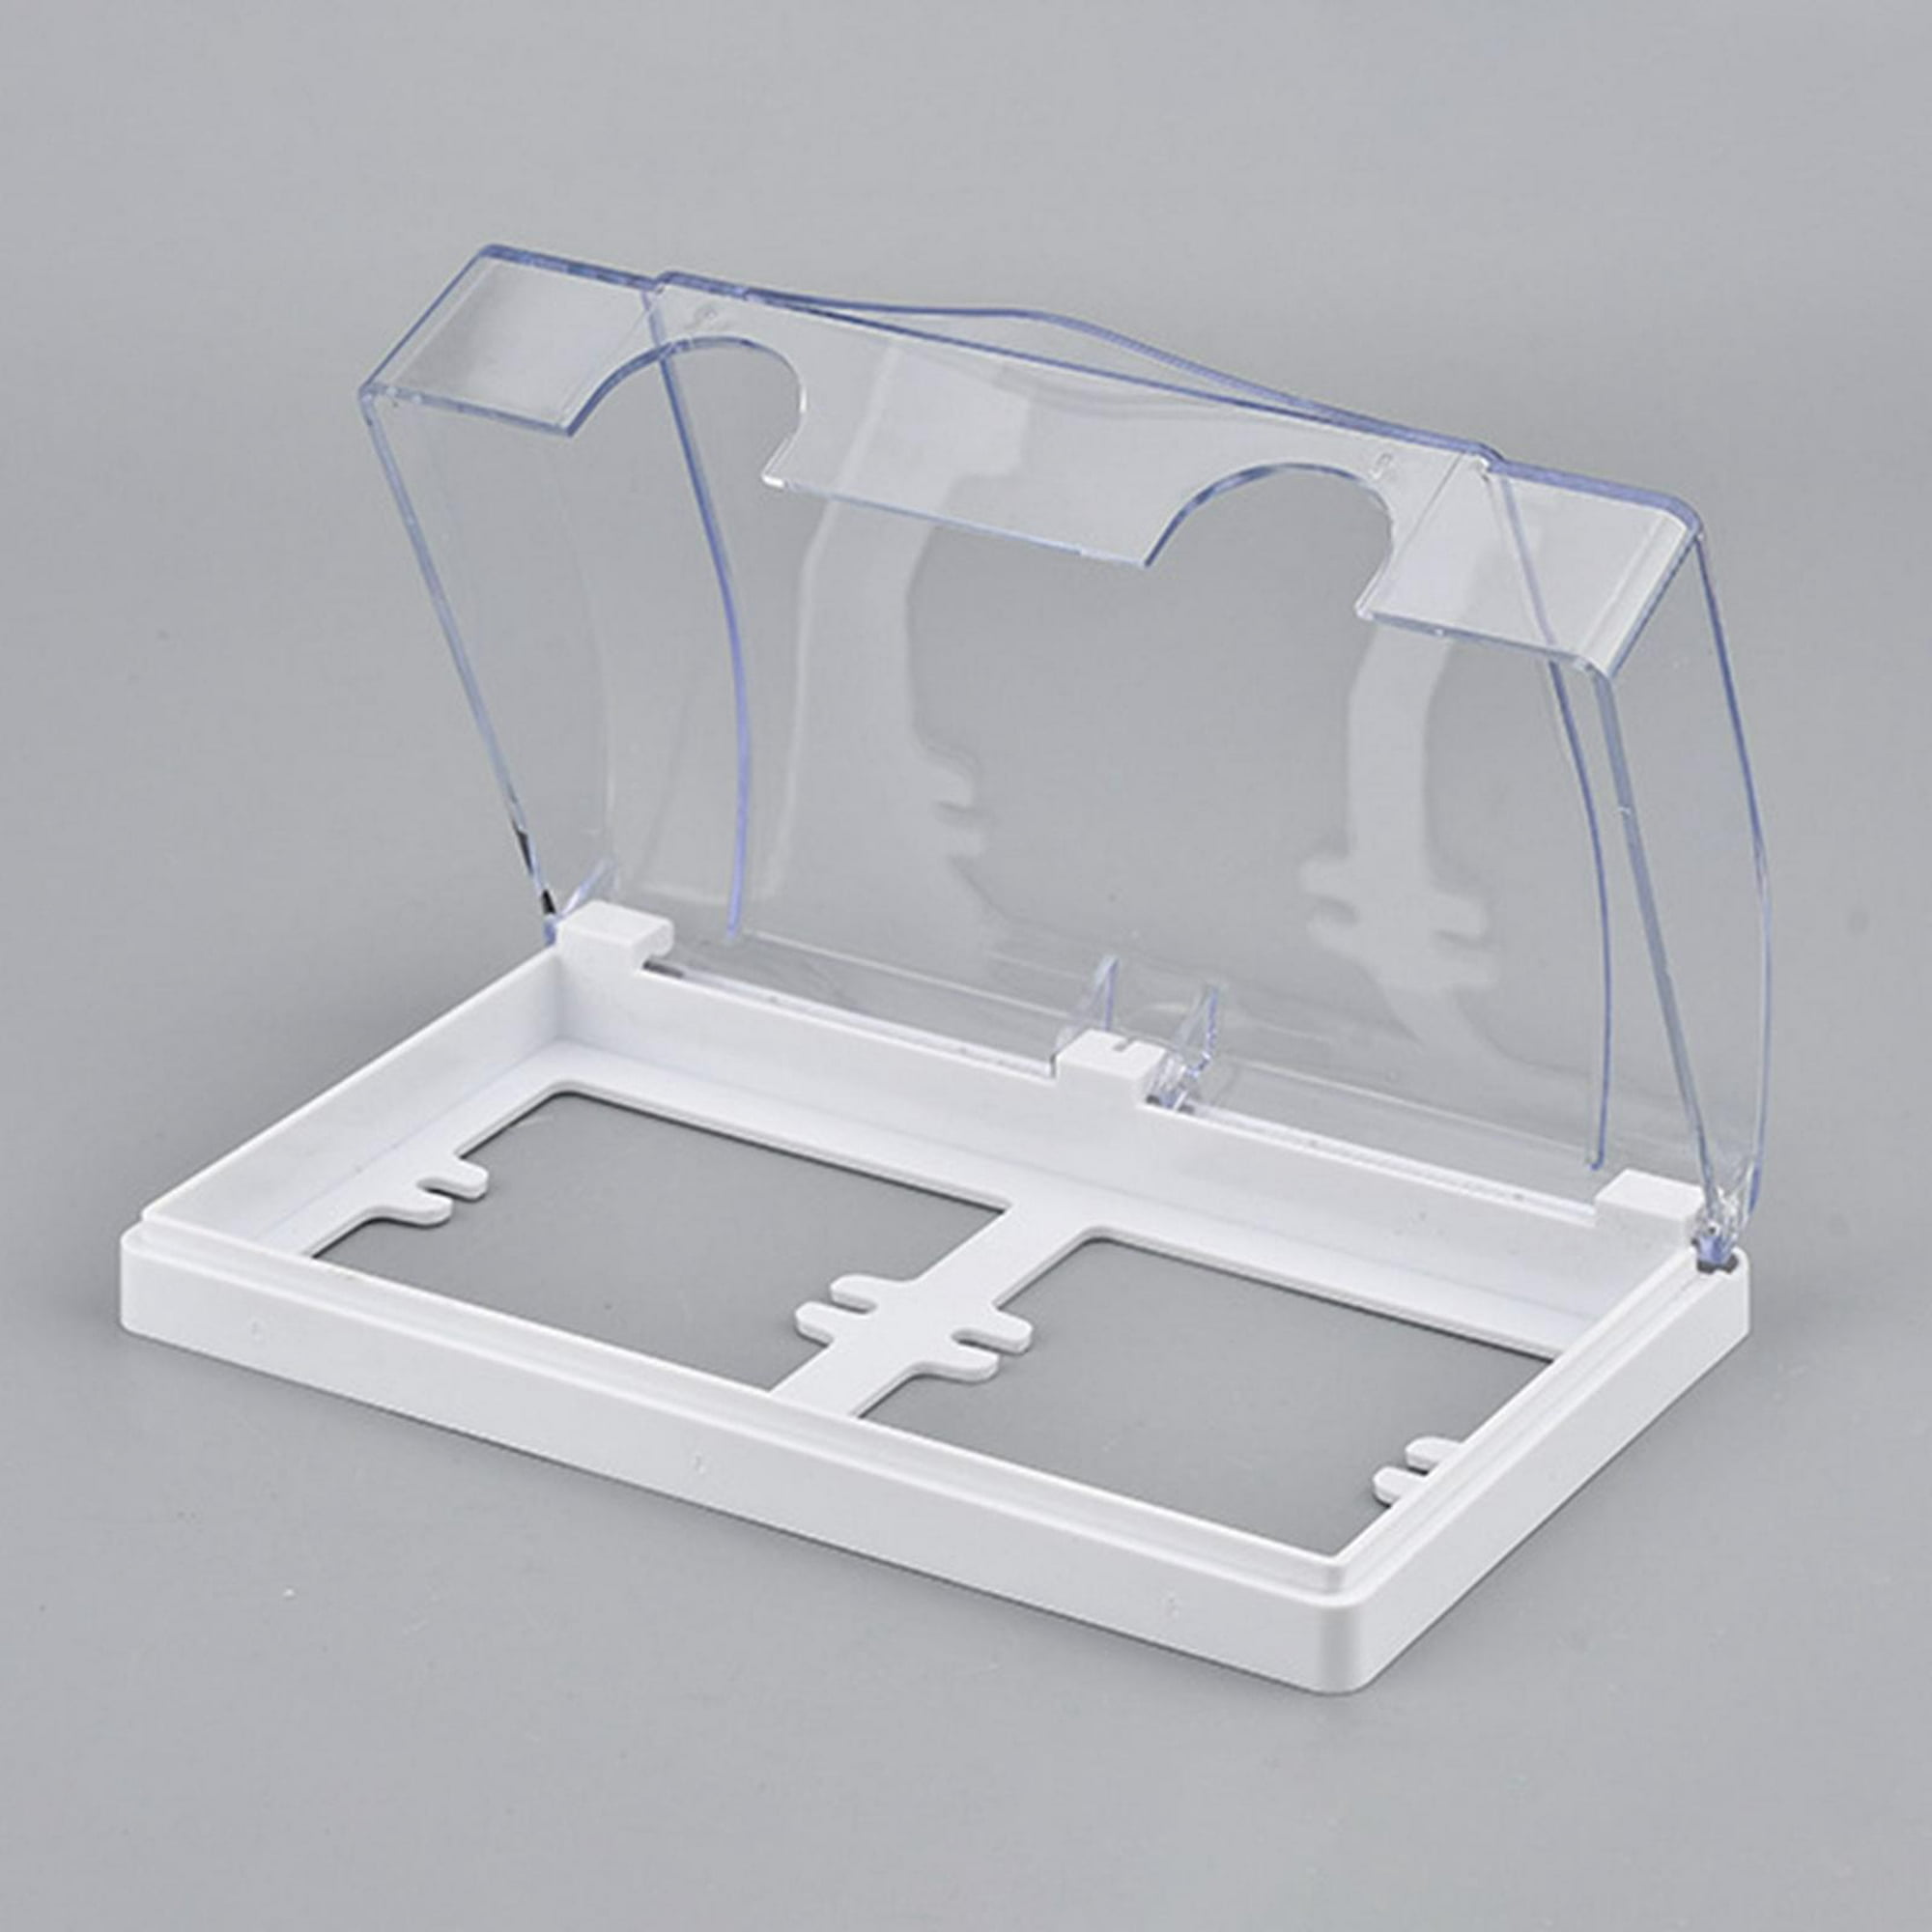 Caja De Enchufe Exterior Impermeable Para Interruptor De Pared, Protector  De Enchufe Exterior De Plástico, Cubierta